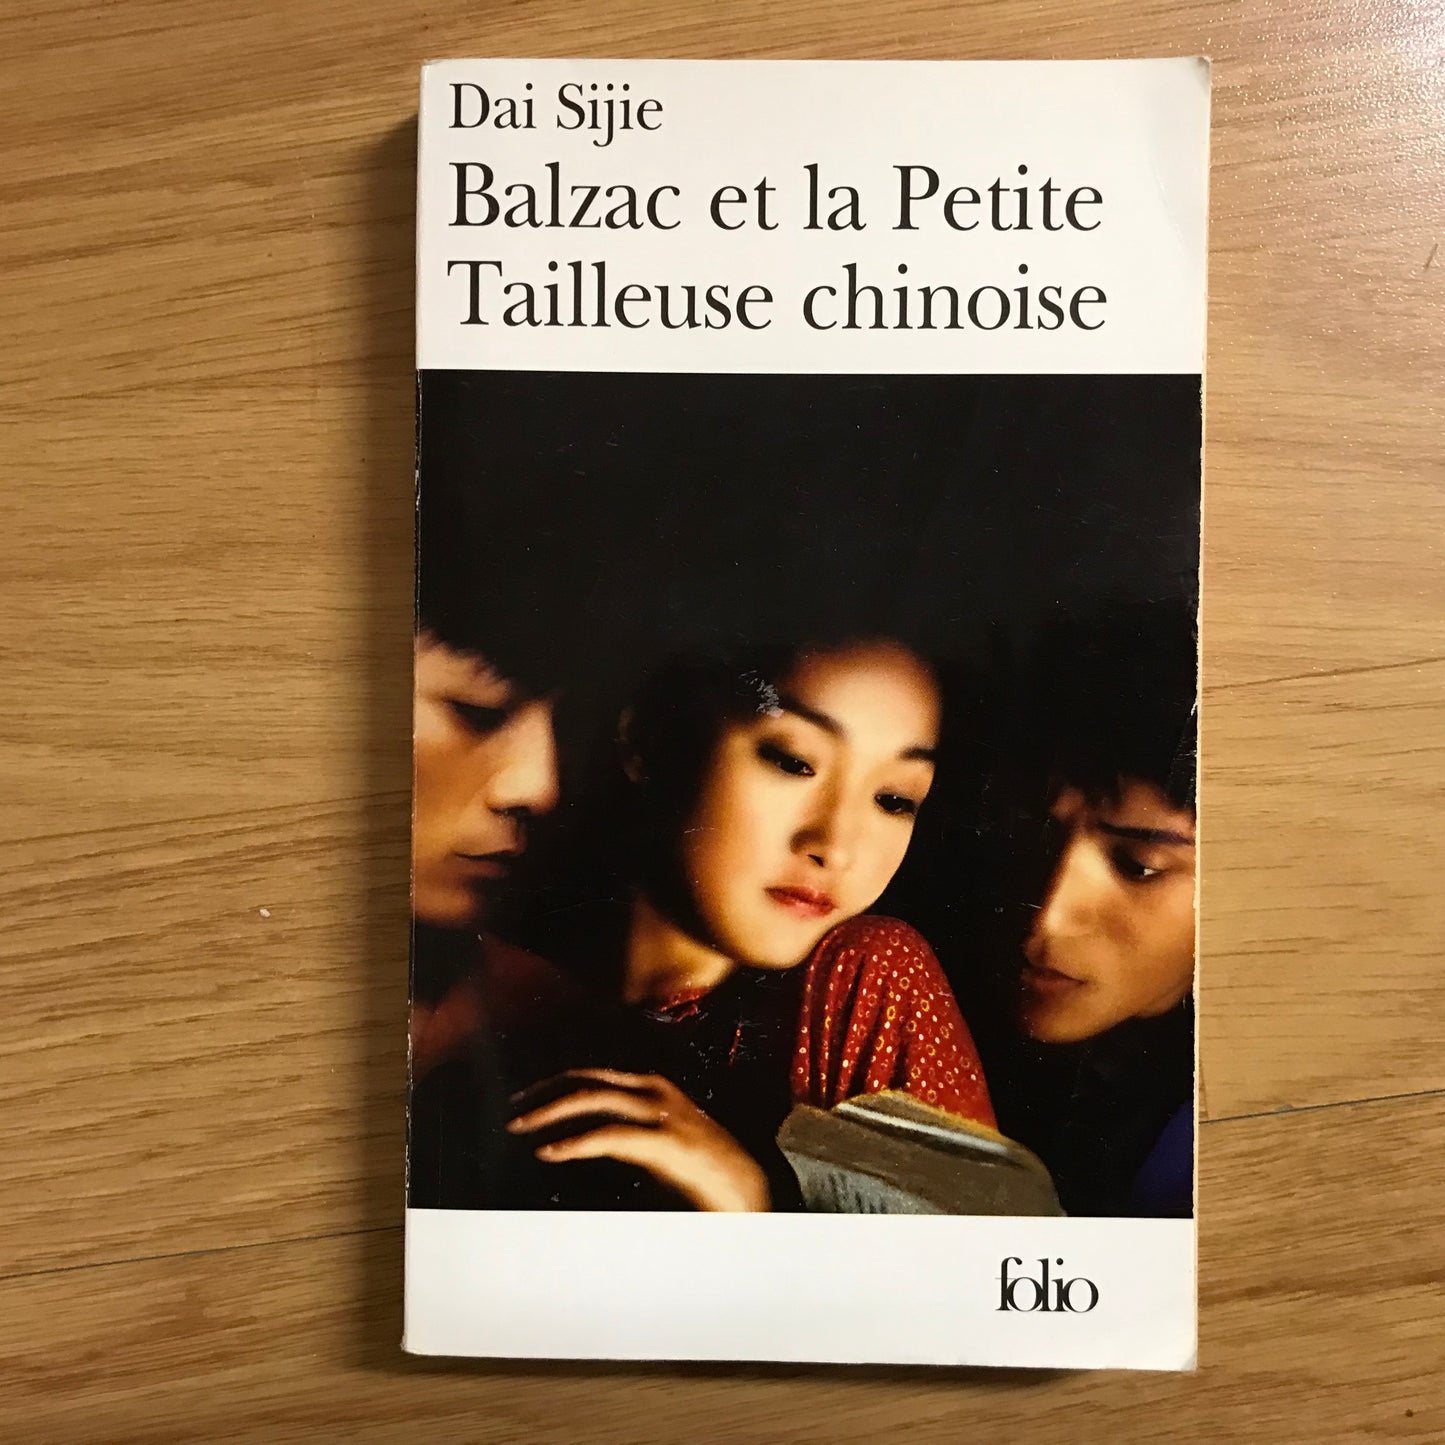 Sijie, Dai - Balzac et la petite tailleuse chinoise